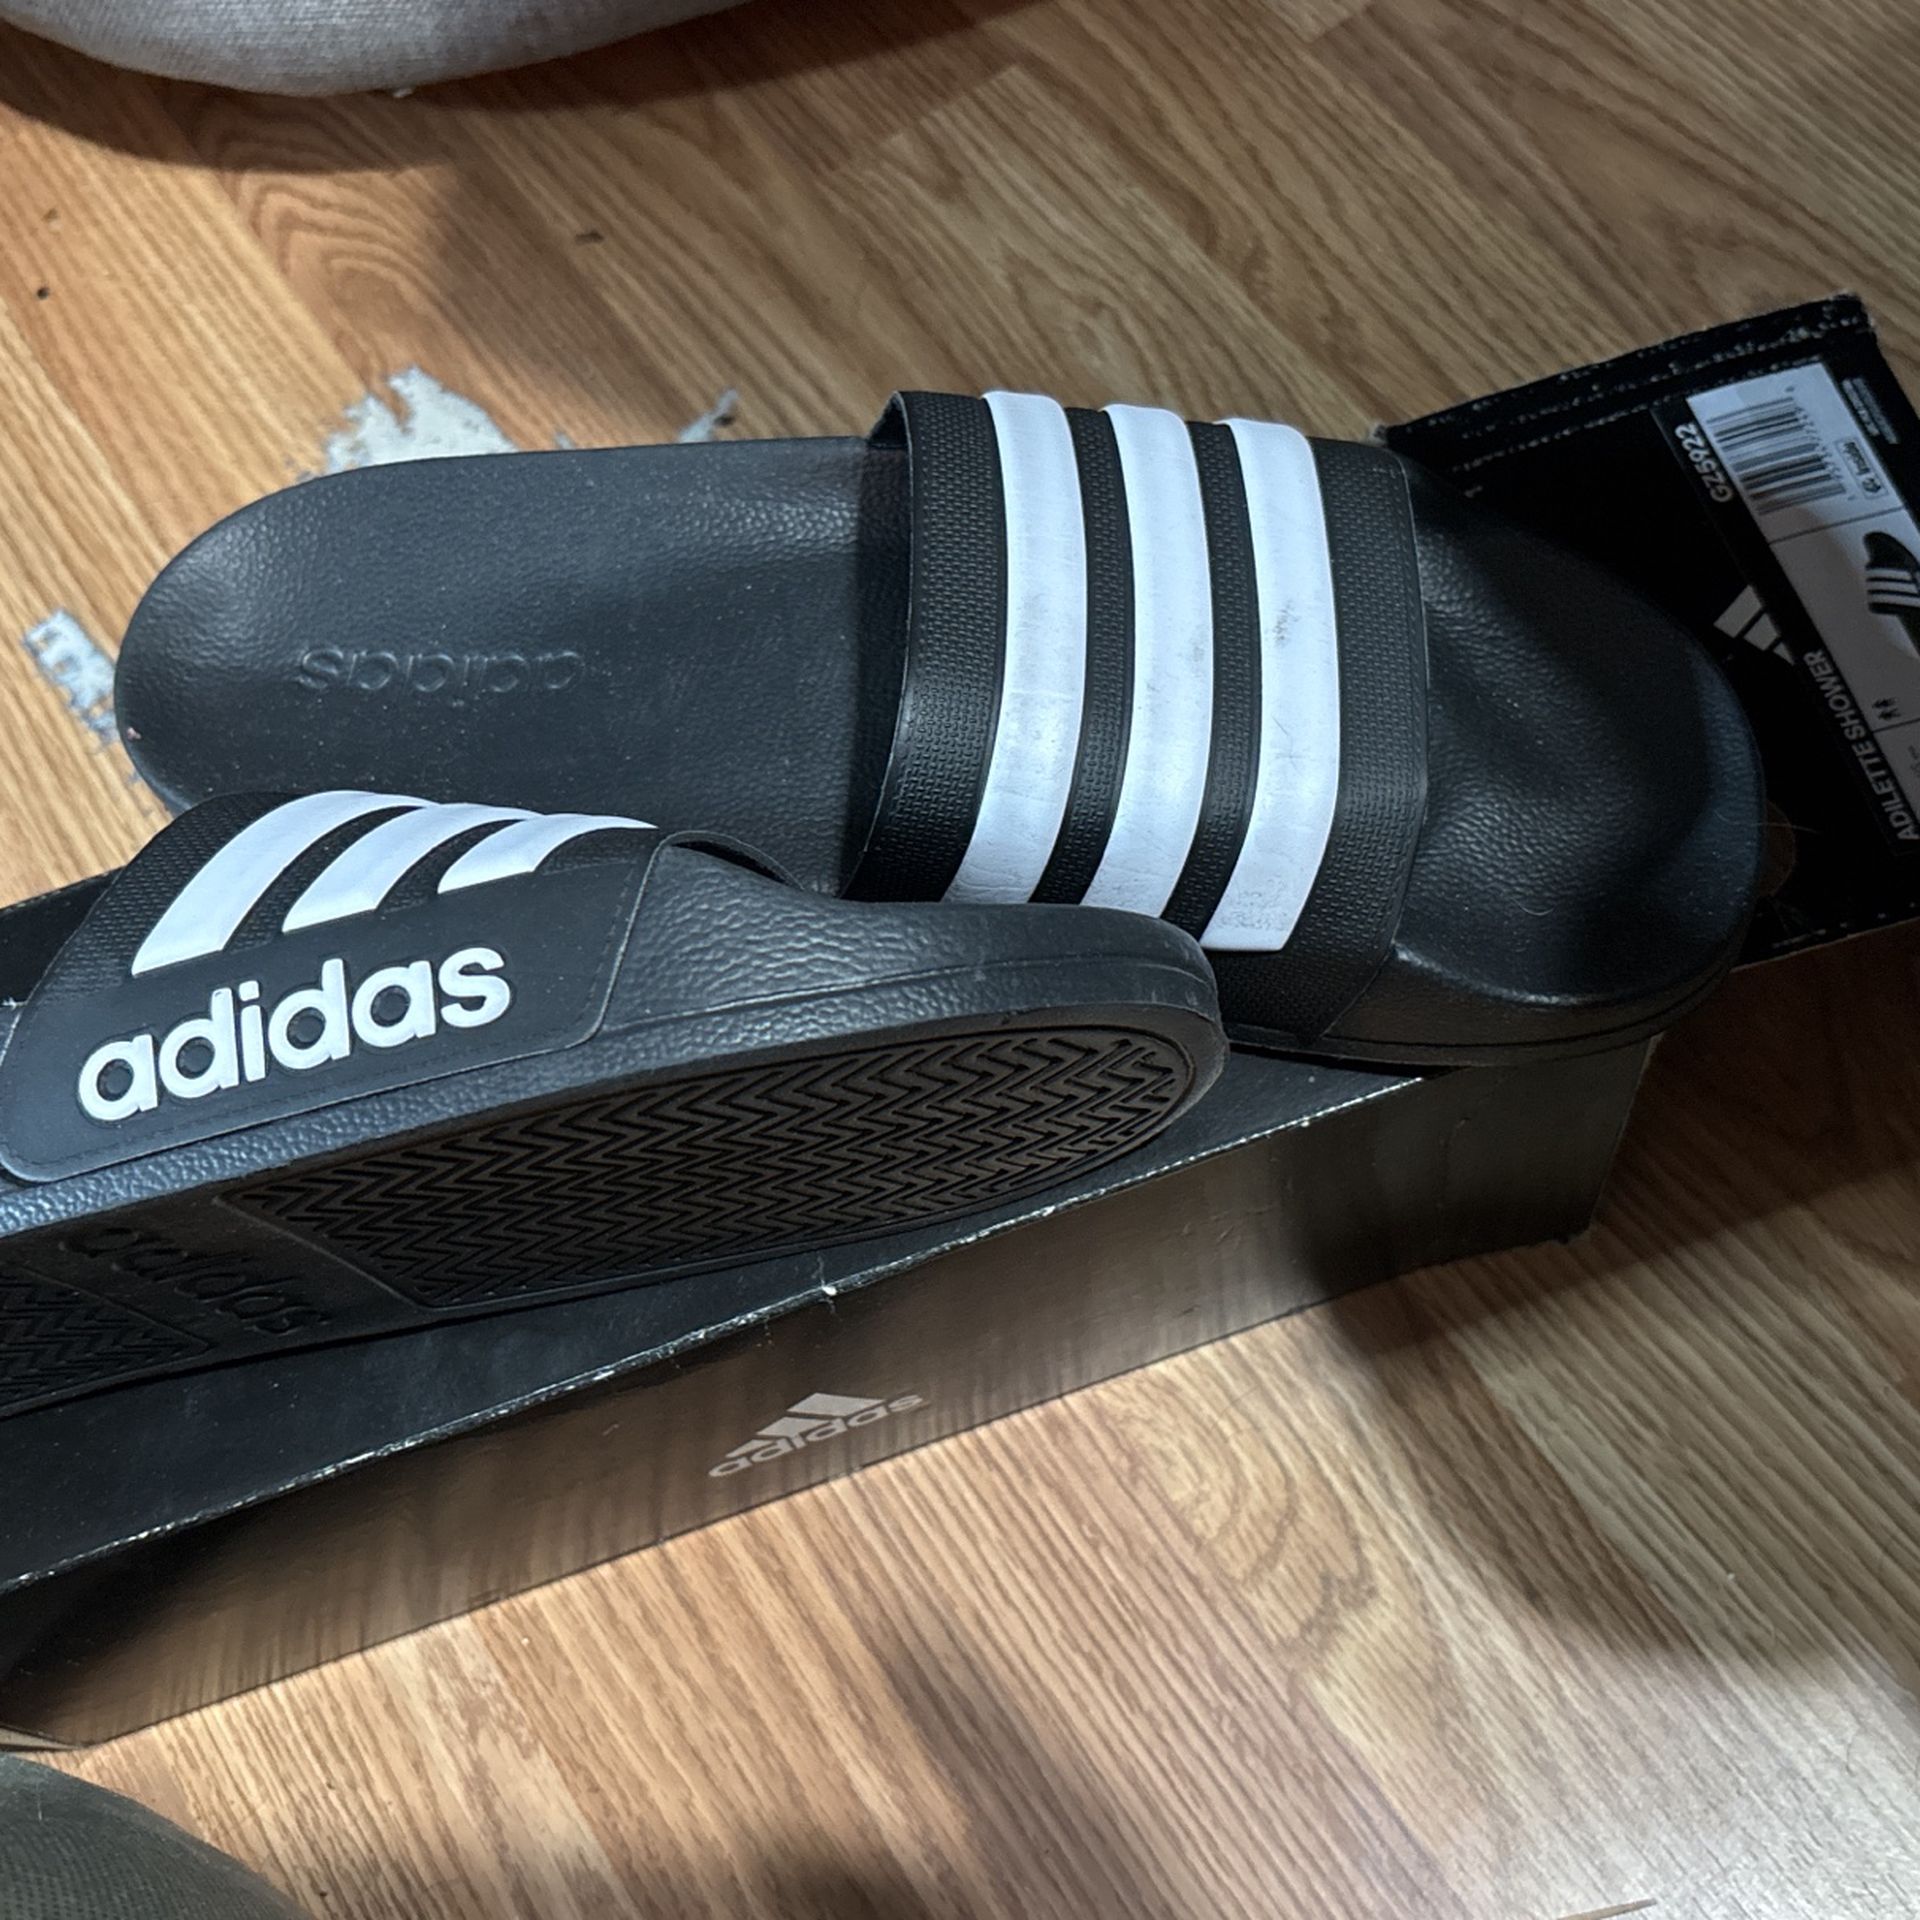 Adidas Slides. Men’s 11s 